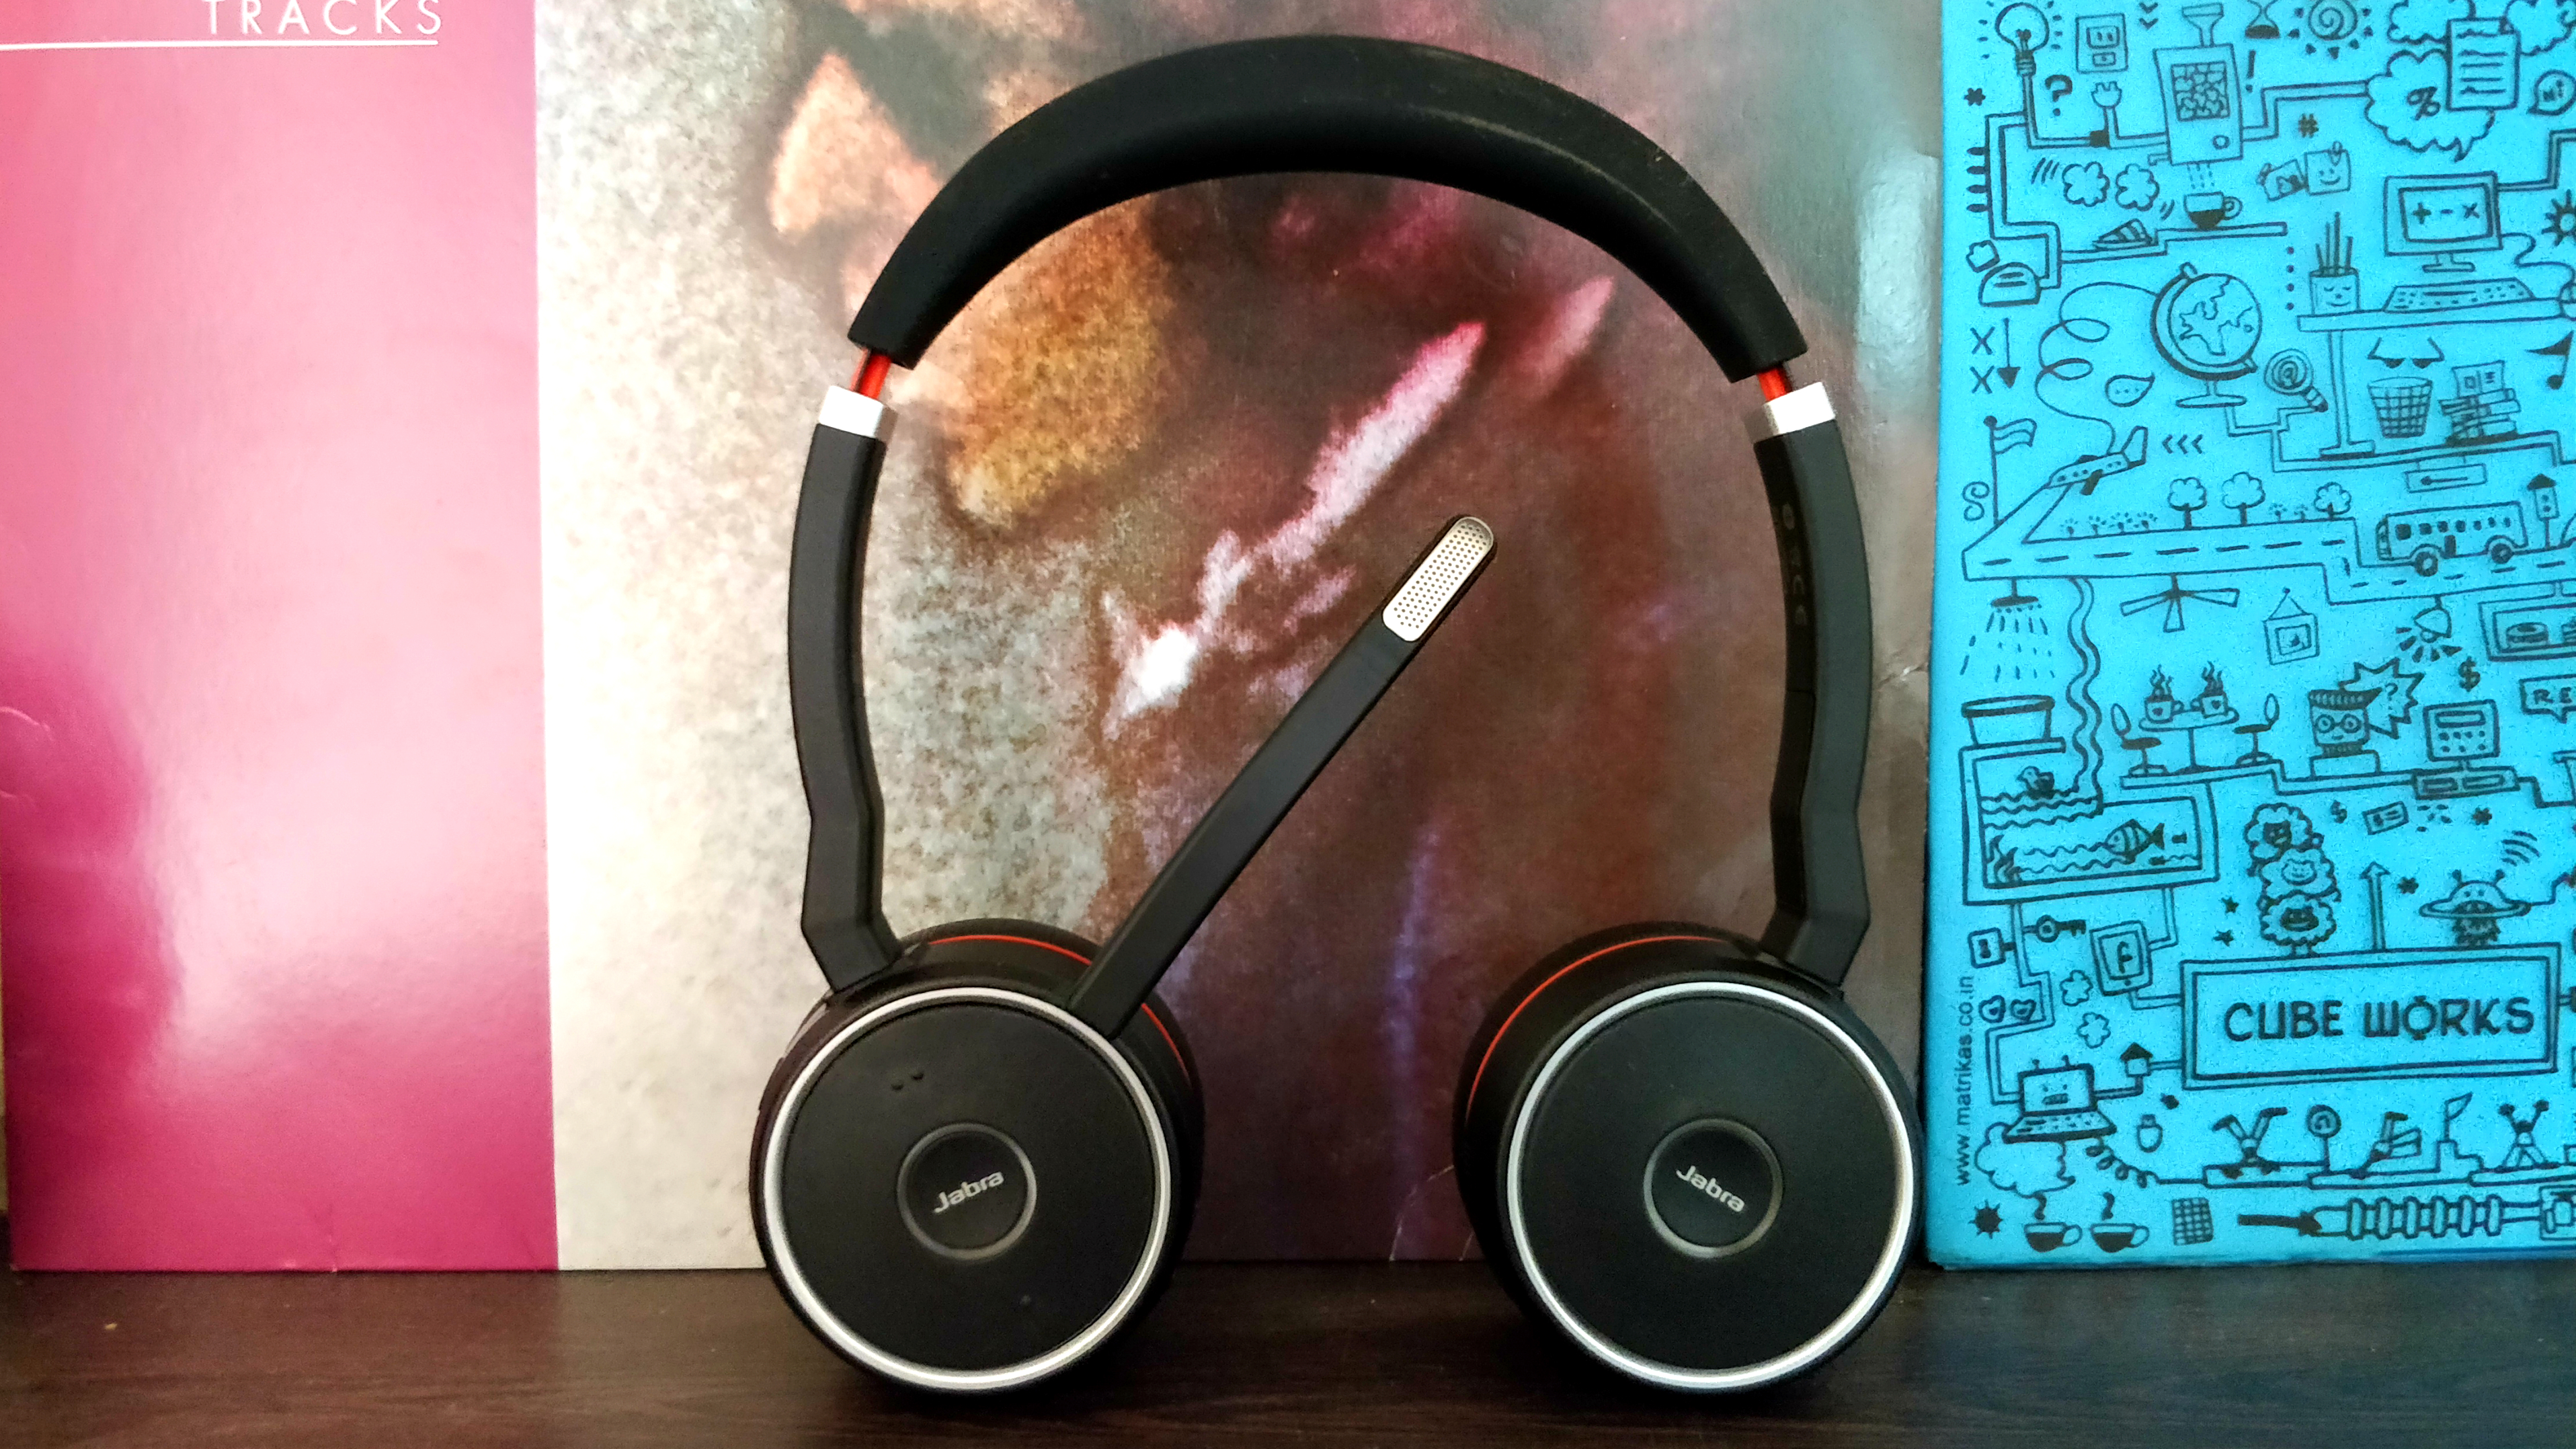 Jabra Evolve 75 Headphones Reduce Open Office Distractions [Review]